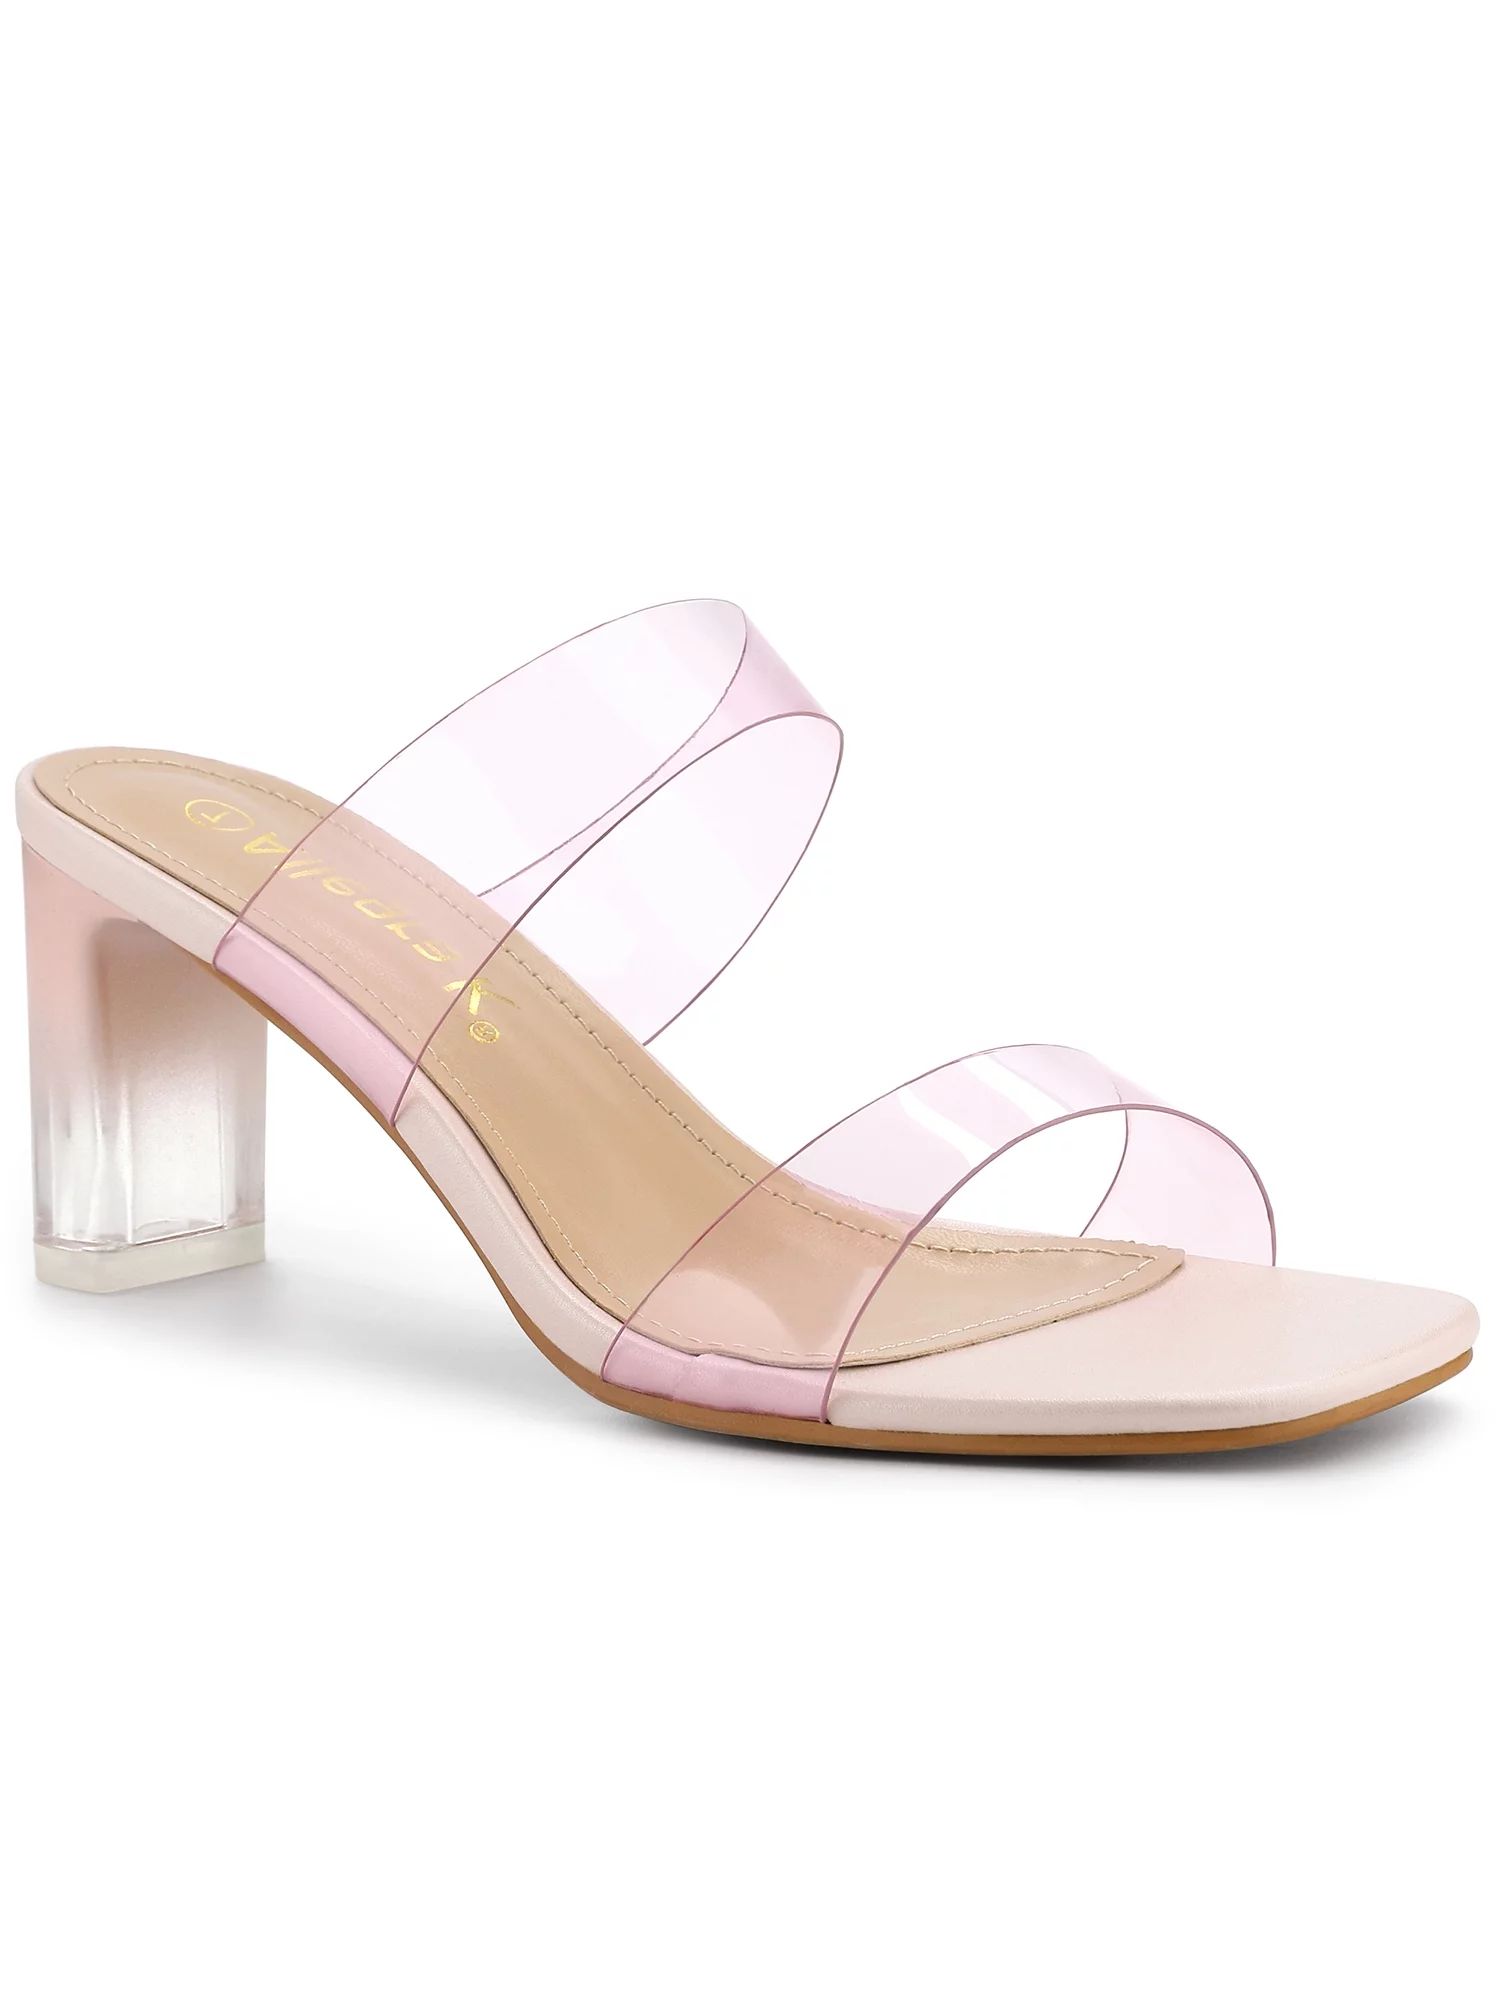 Allegra K Women's Sandals Block Heels Clear Colorful Straps Slides Sandals | Walmart (US)